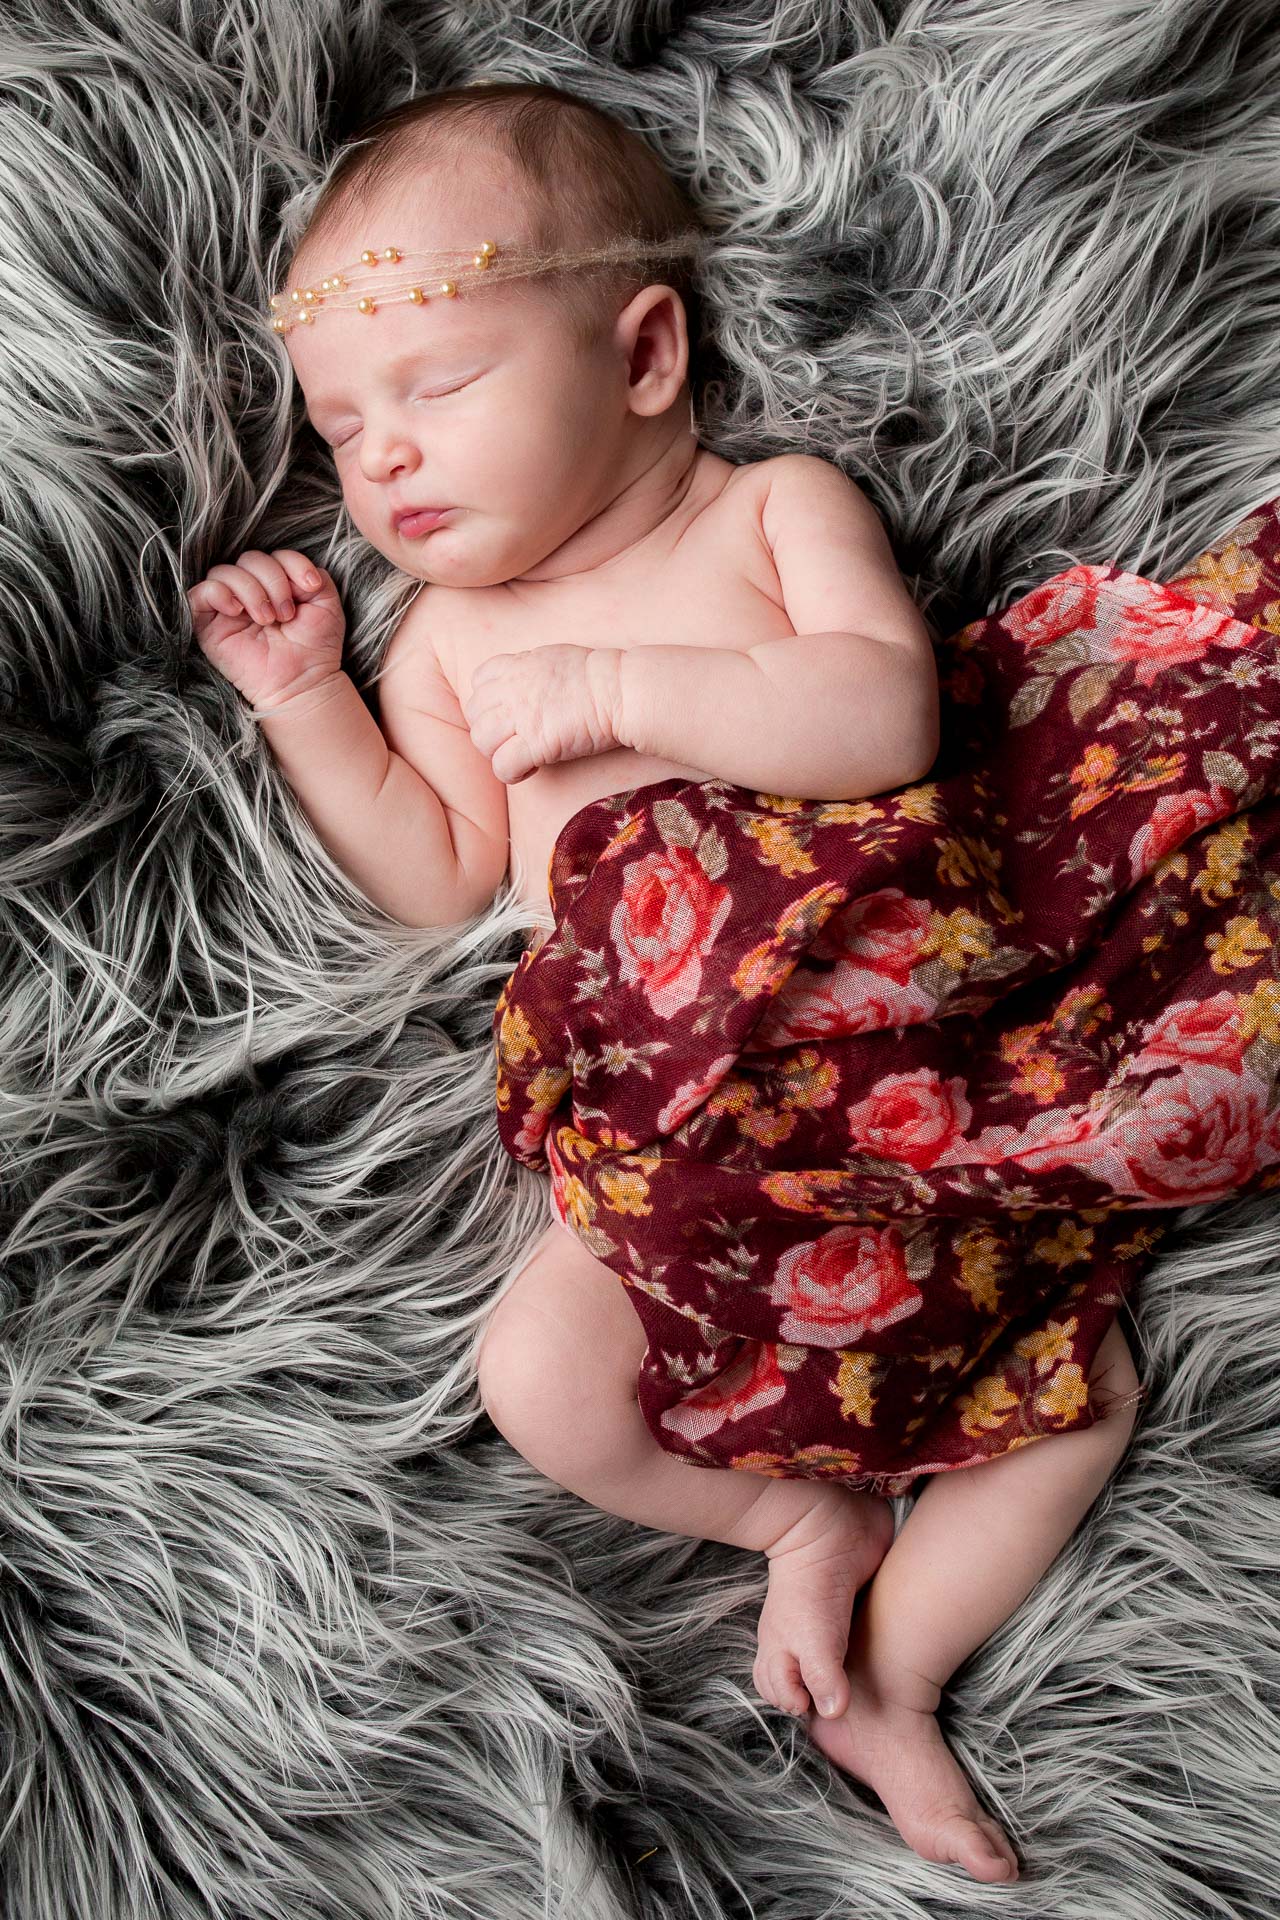 newborn lifestyle baby portrait sleeping on fur blanket